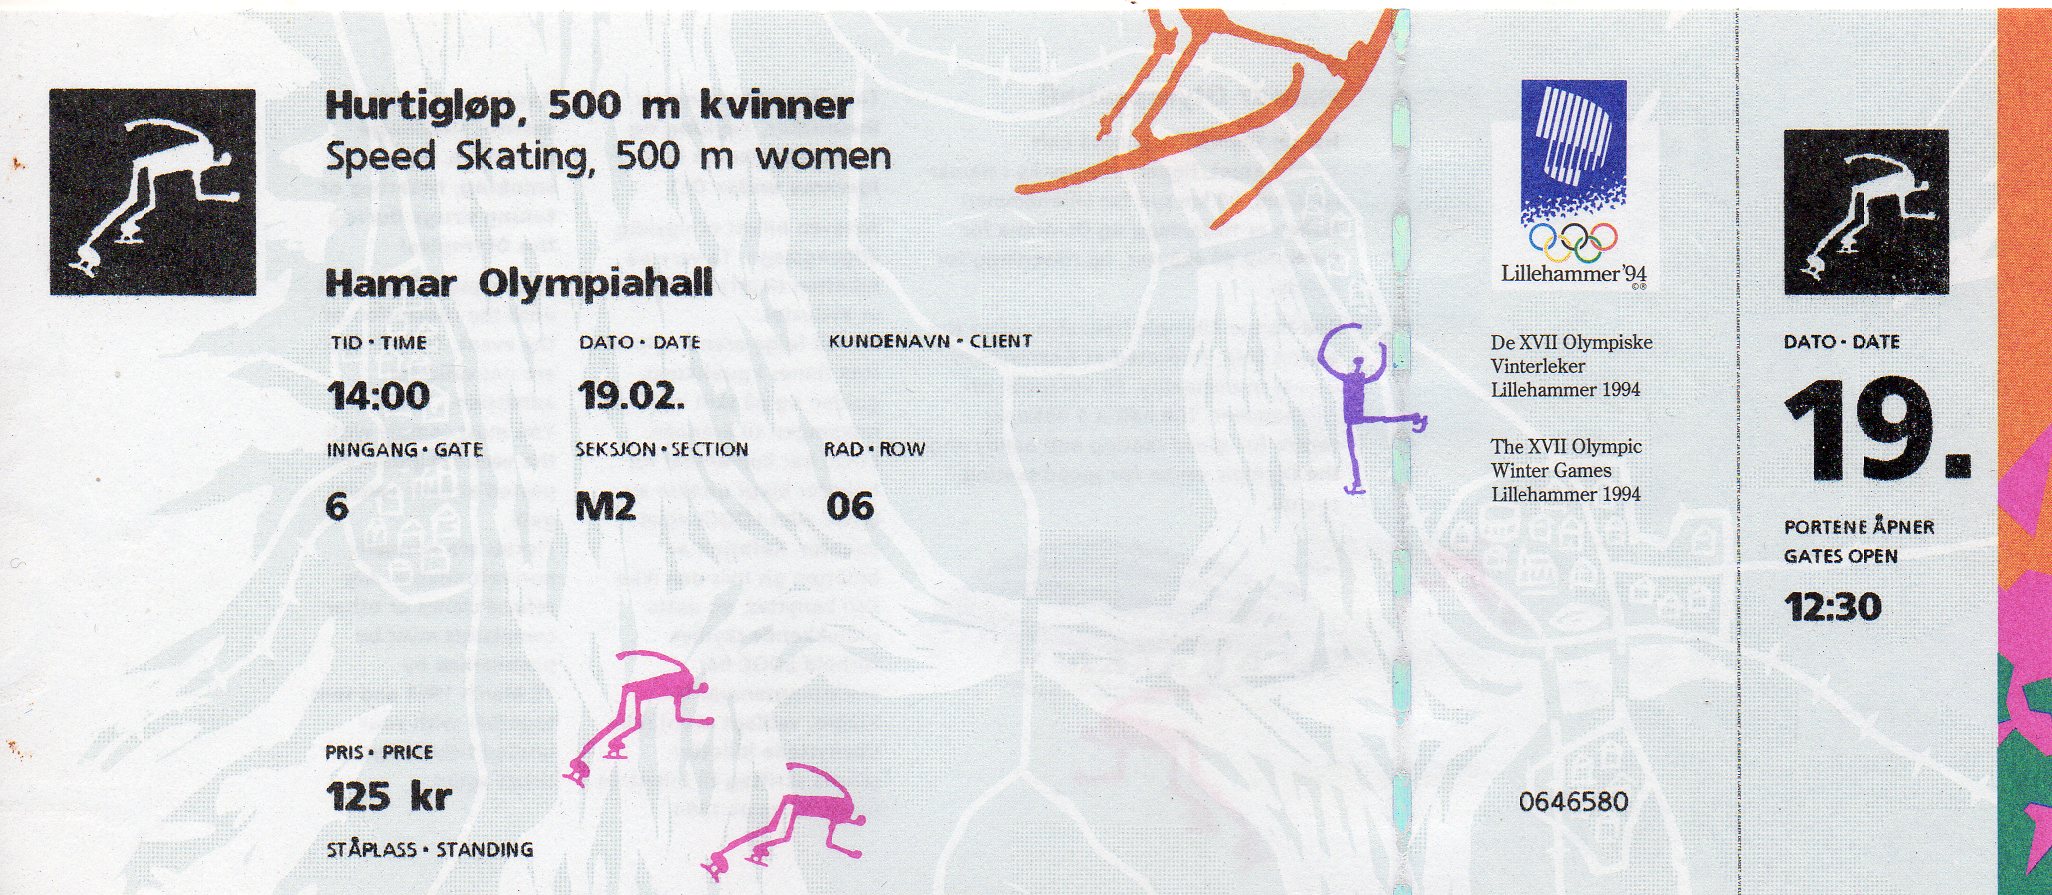 Ticket - Speed skating 500 m women